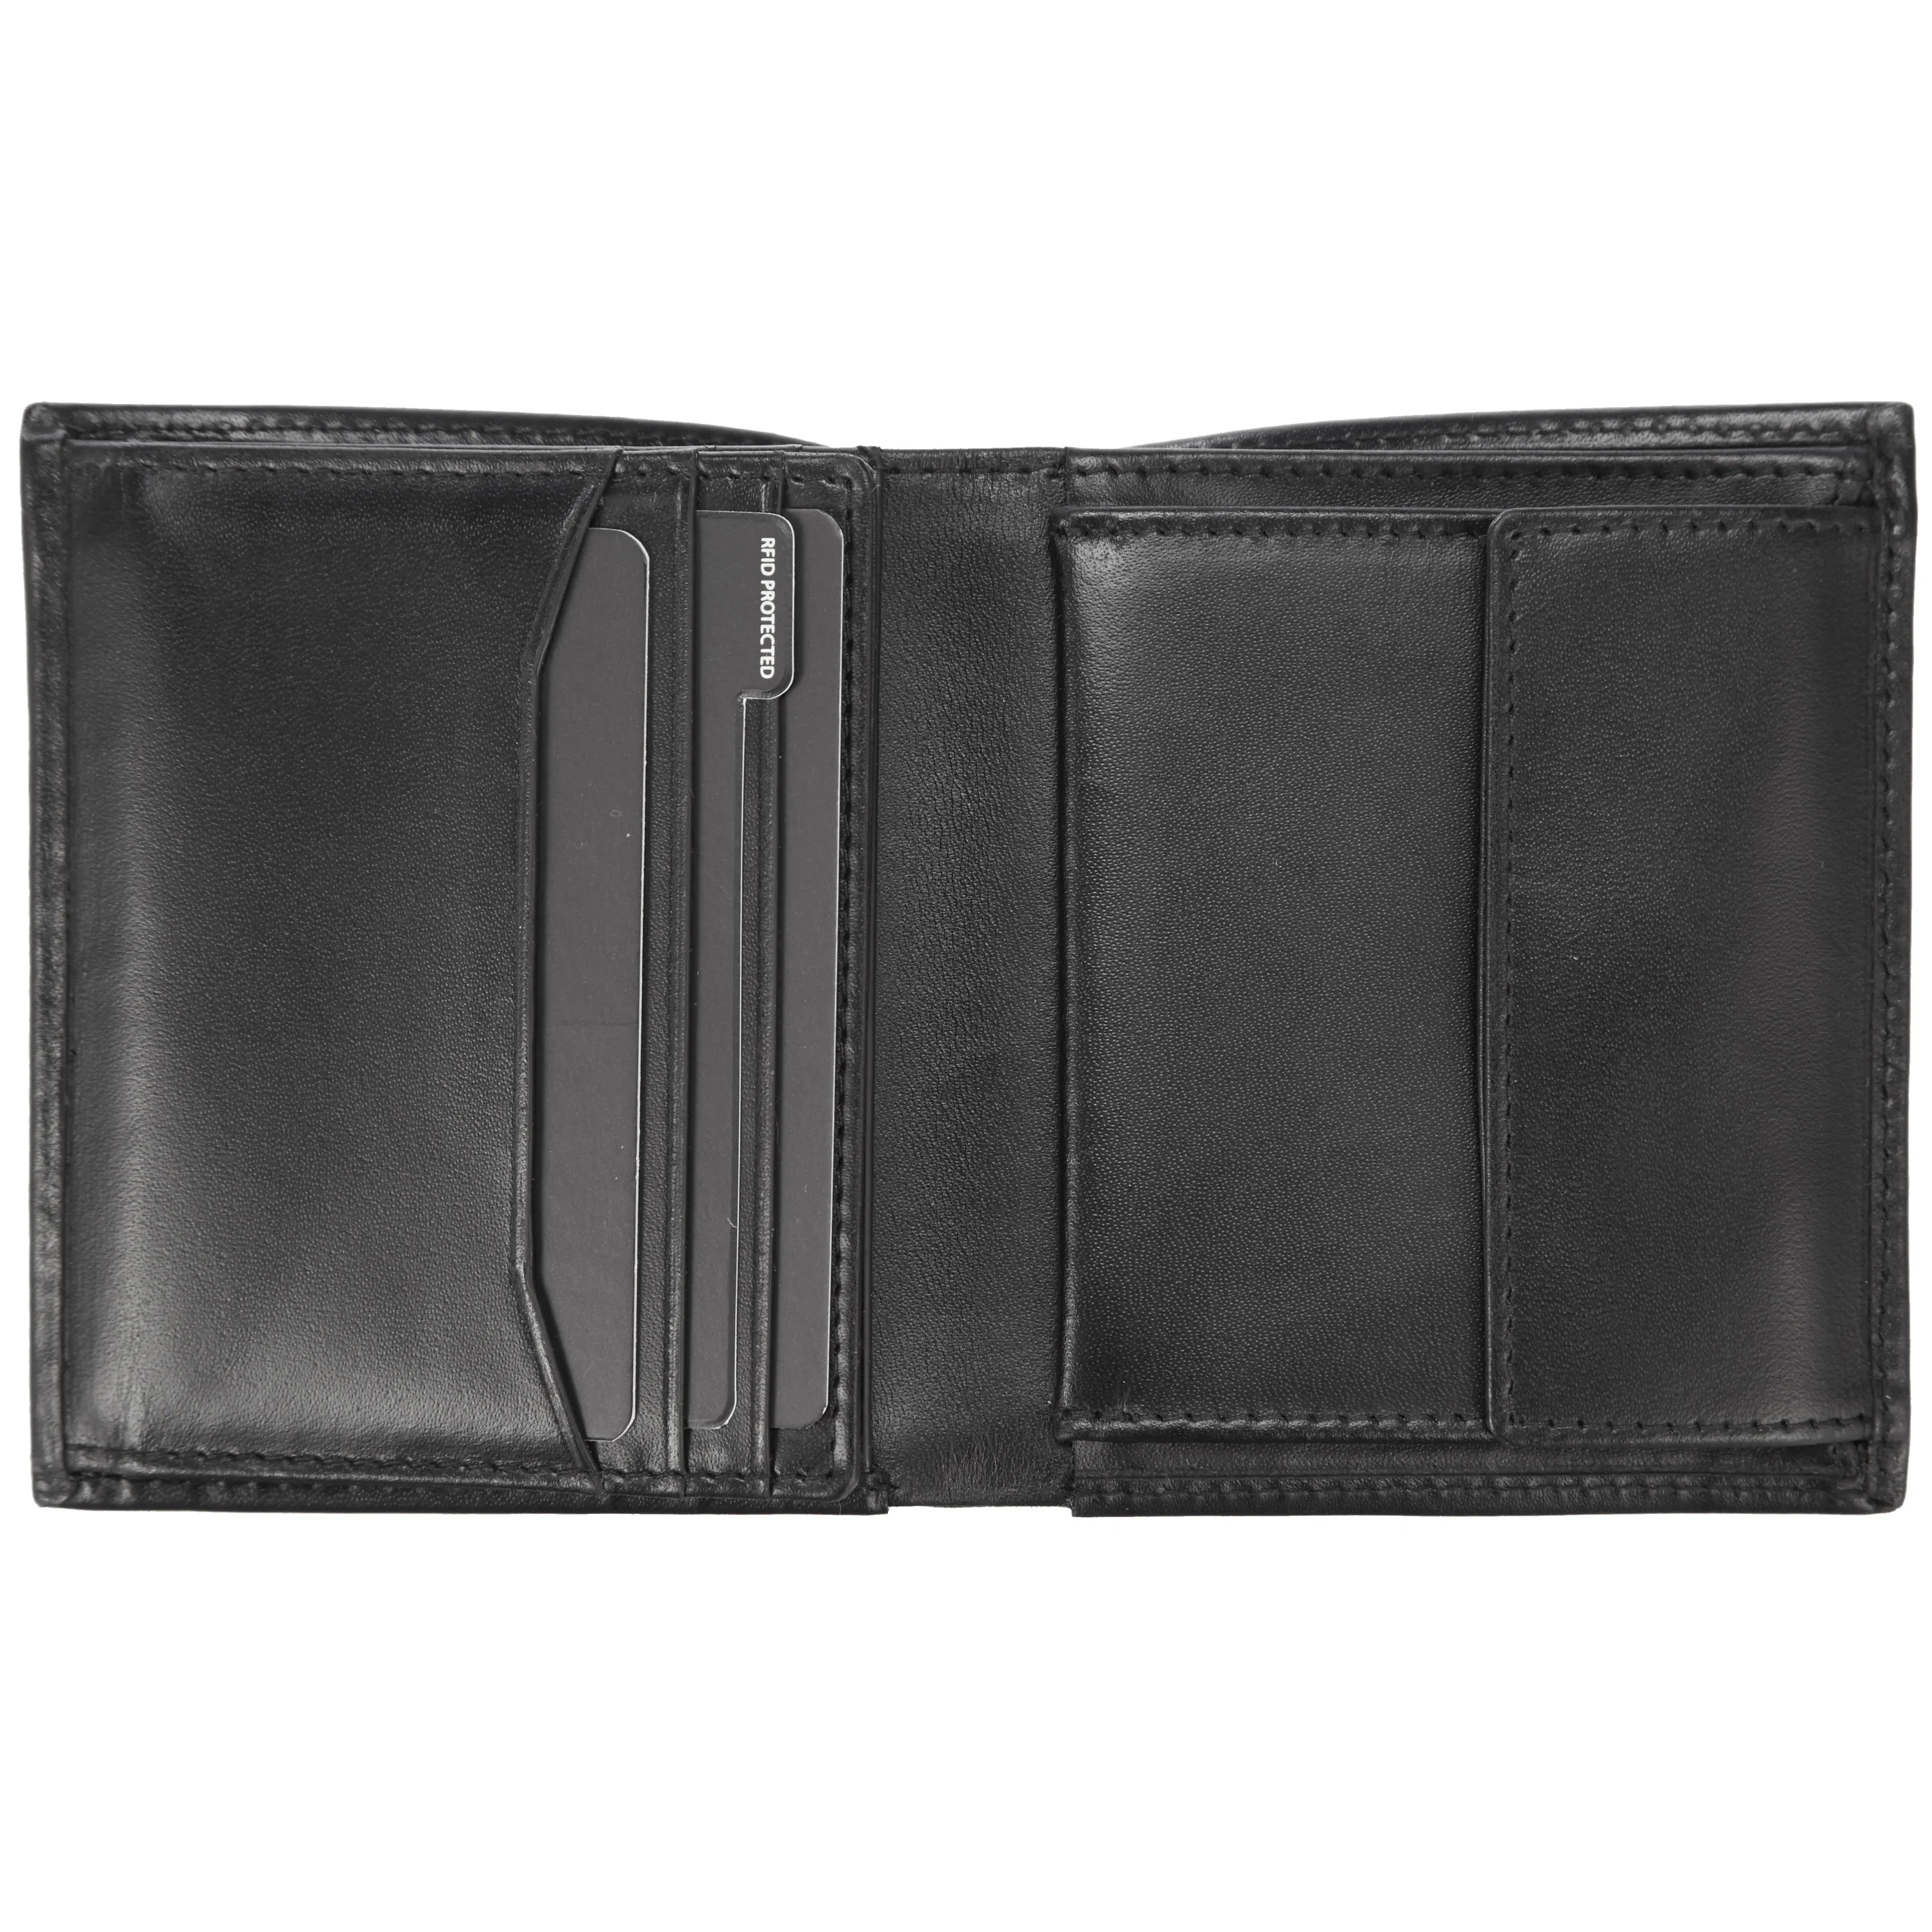 Porsche Design Accessories Classic Wallet 6 RFID 10 cm - Black